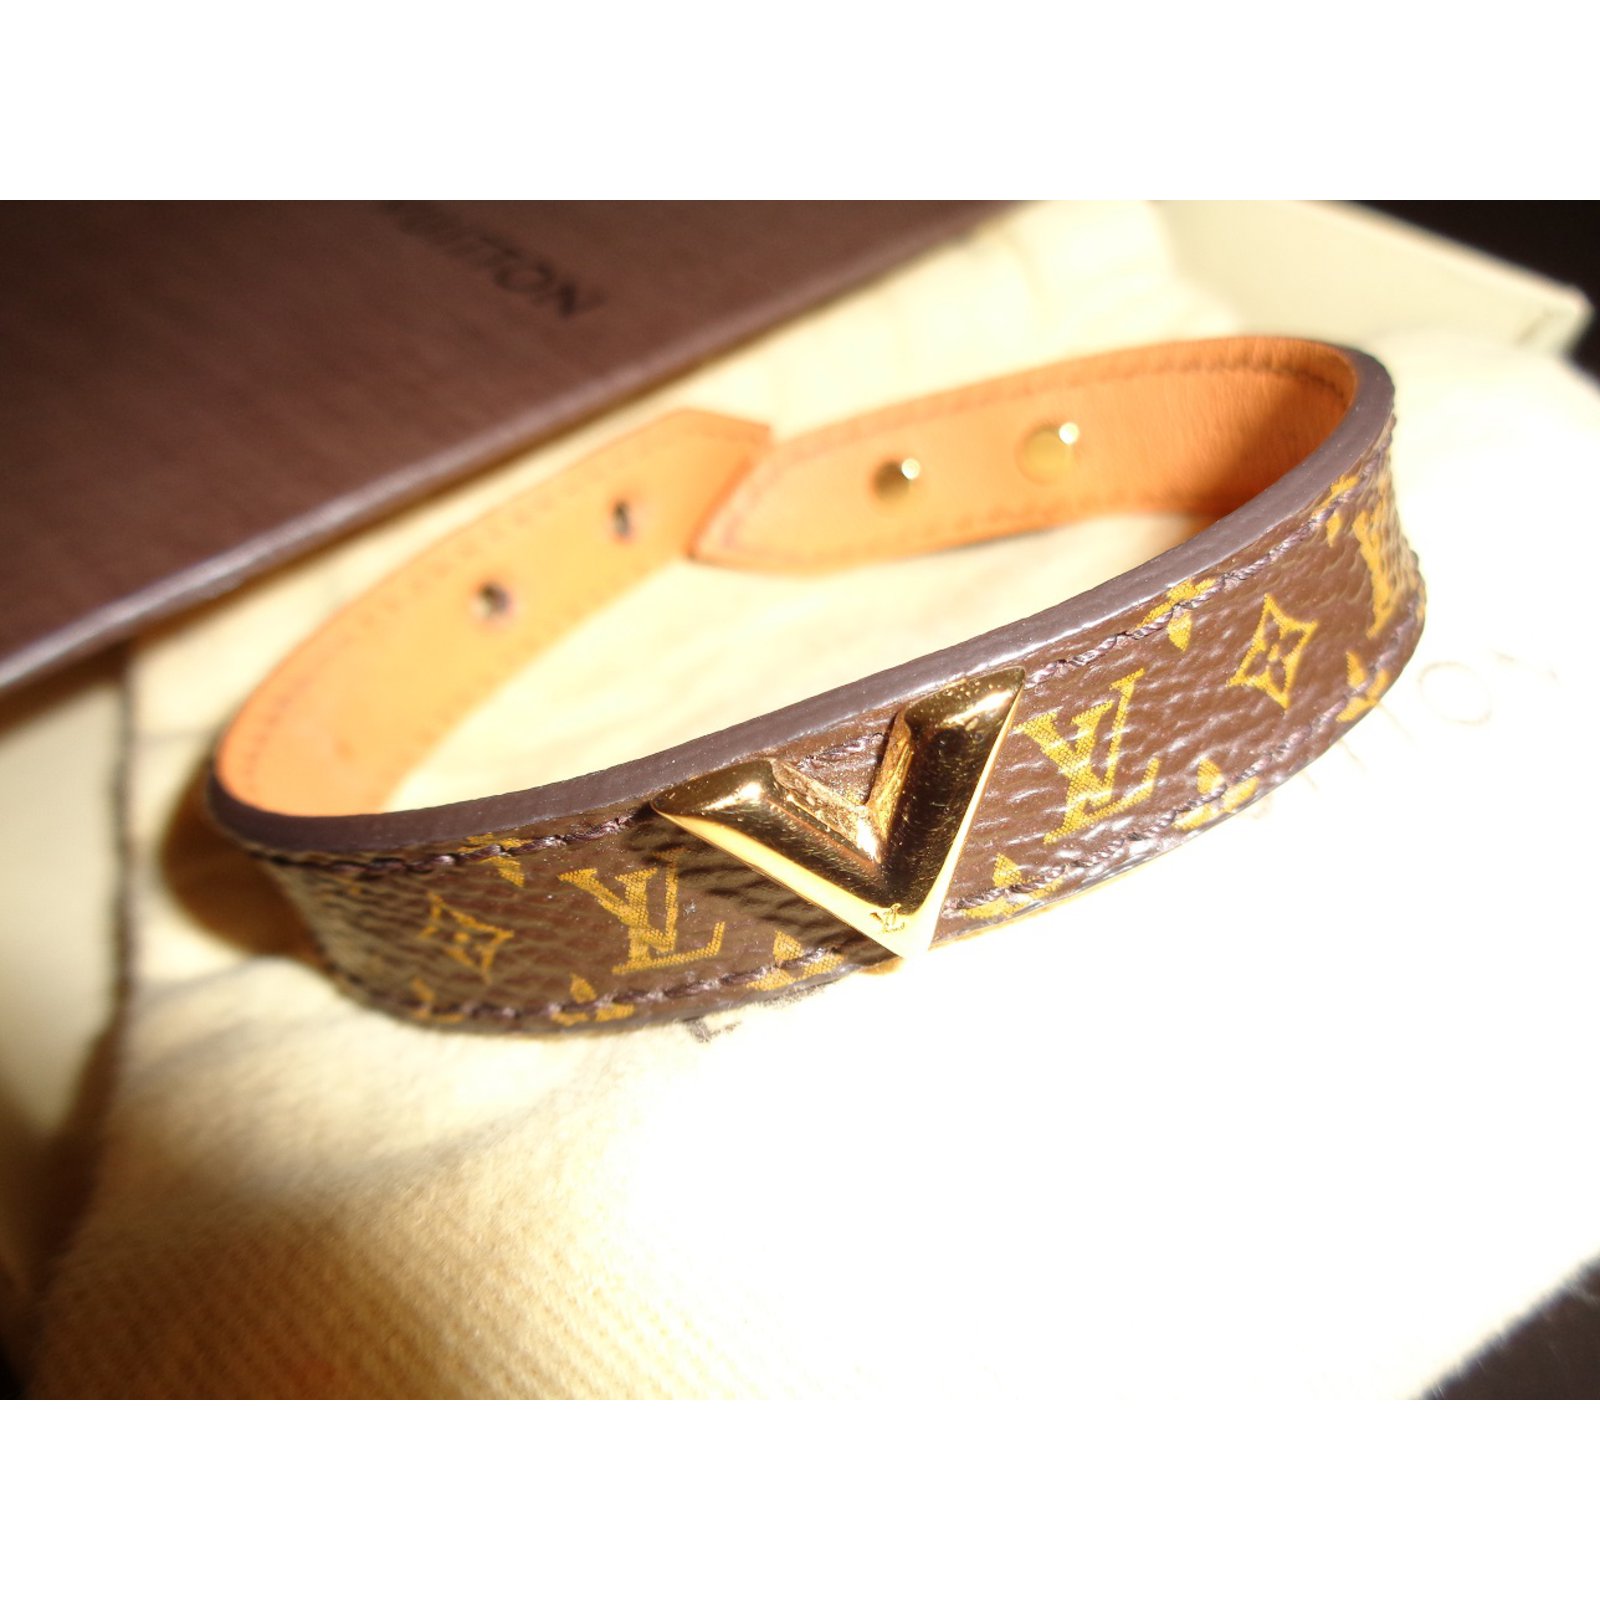 Keep it cloth bracelet Louis Vuitton Brown in Cloth - 32151110